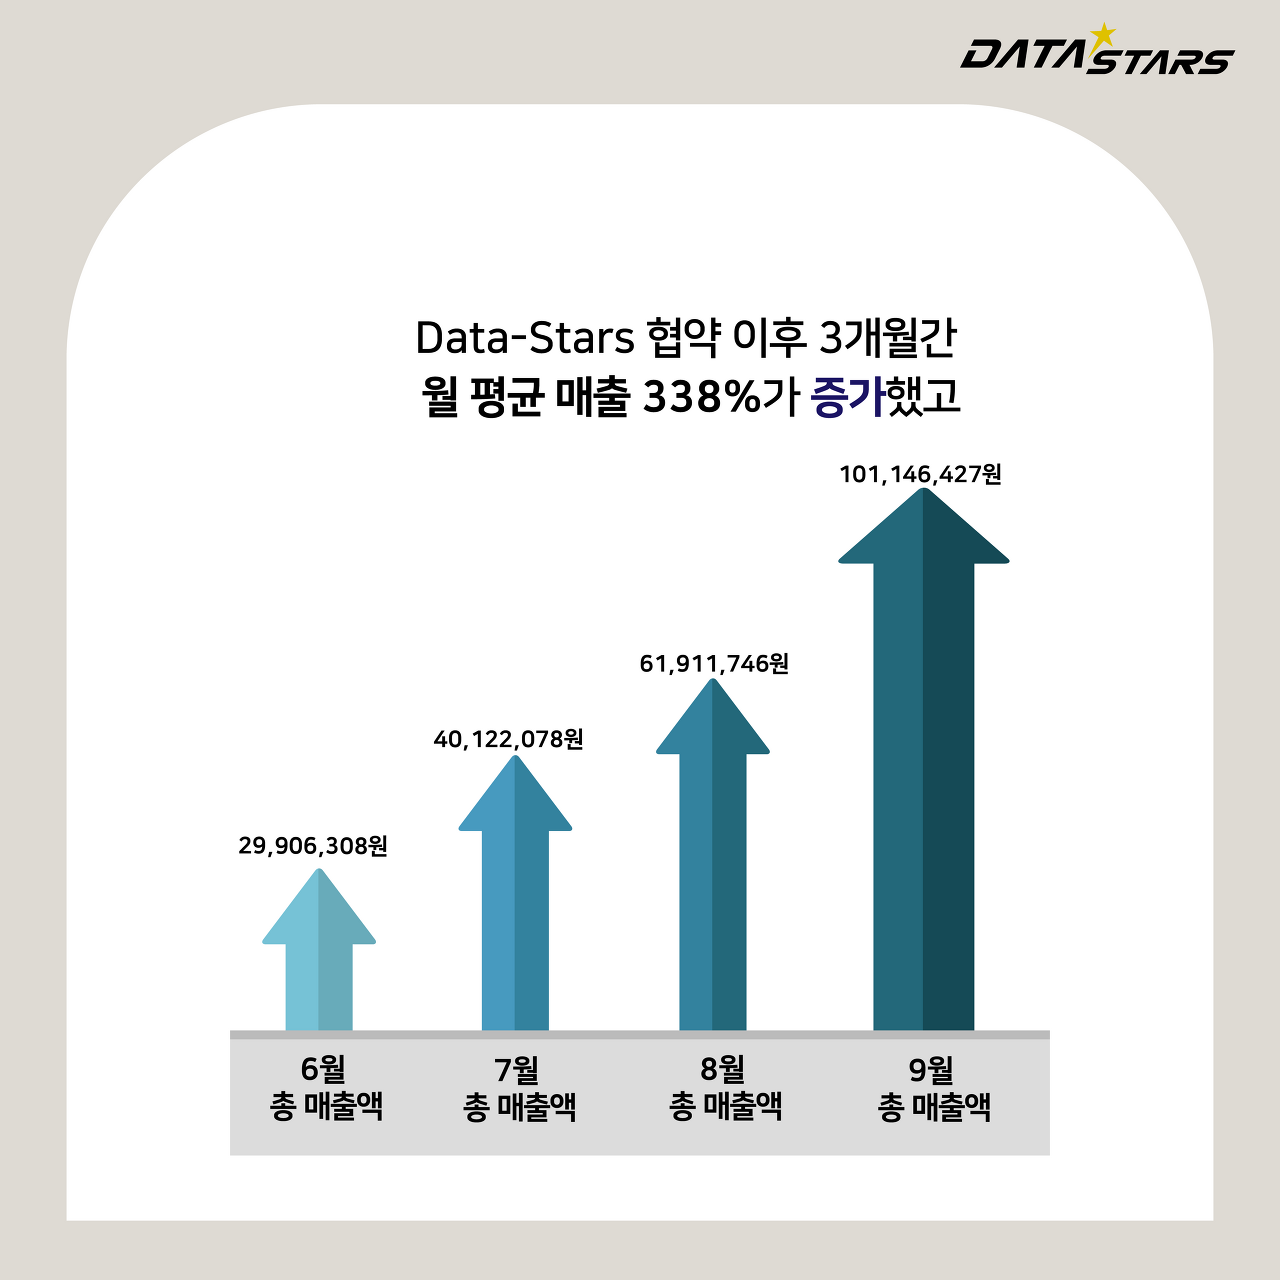 Data-Stars 협약 이후 3개월간 월 평균 매출 338%가 증가했고 (6월 총 매출액 : 29,906,308원 / 7월 총 매출액 : 40,122,078원 / 8월 총 매출액 : 61,911,746원 / 9월 총 매출액 : 101,146,427원)